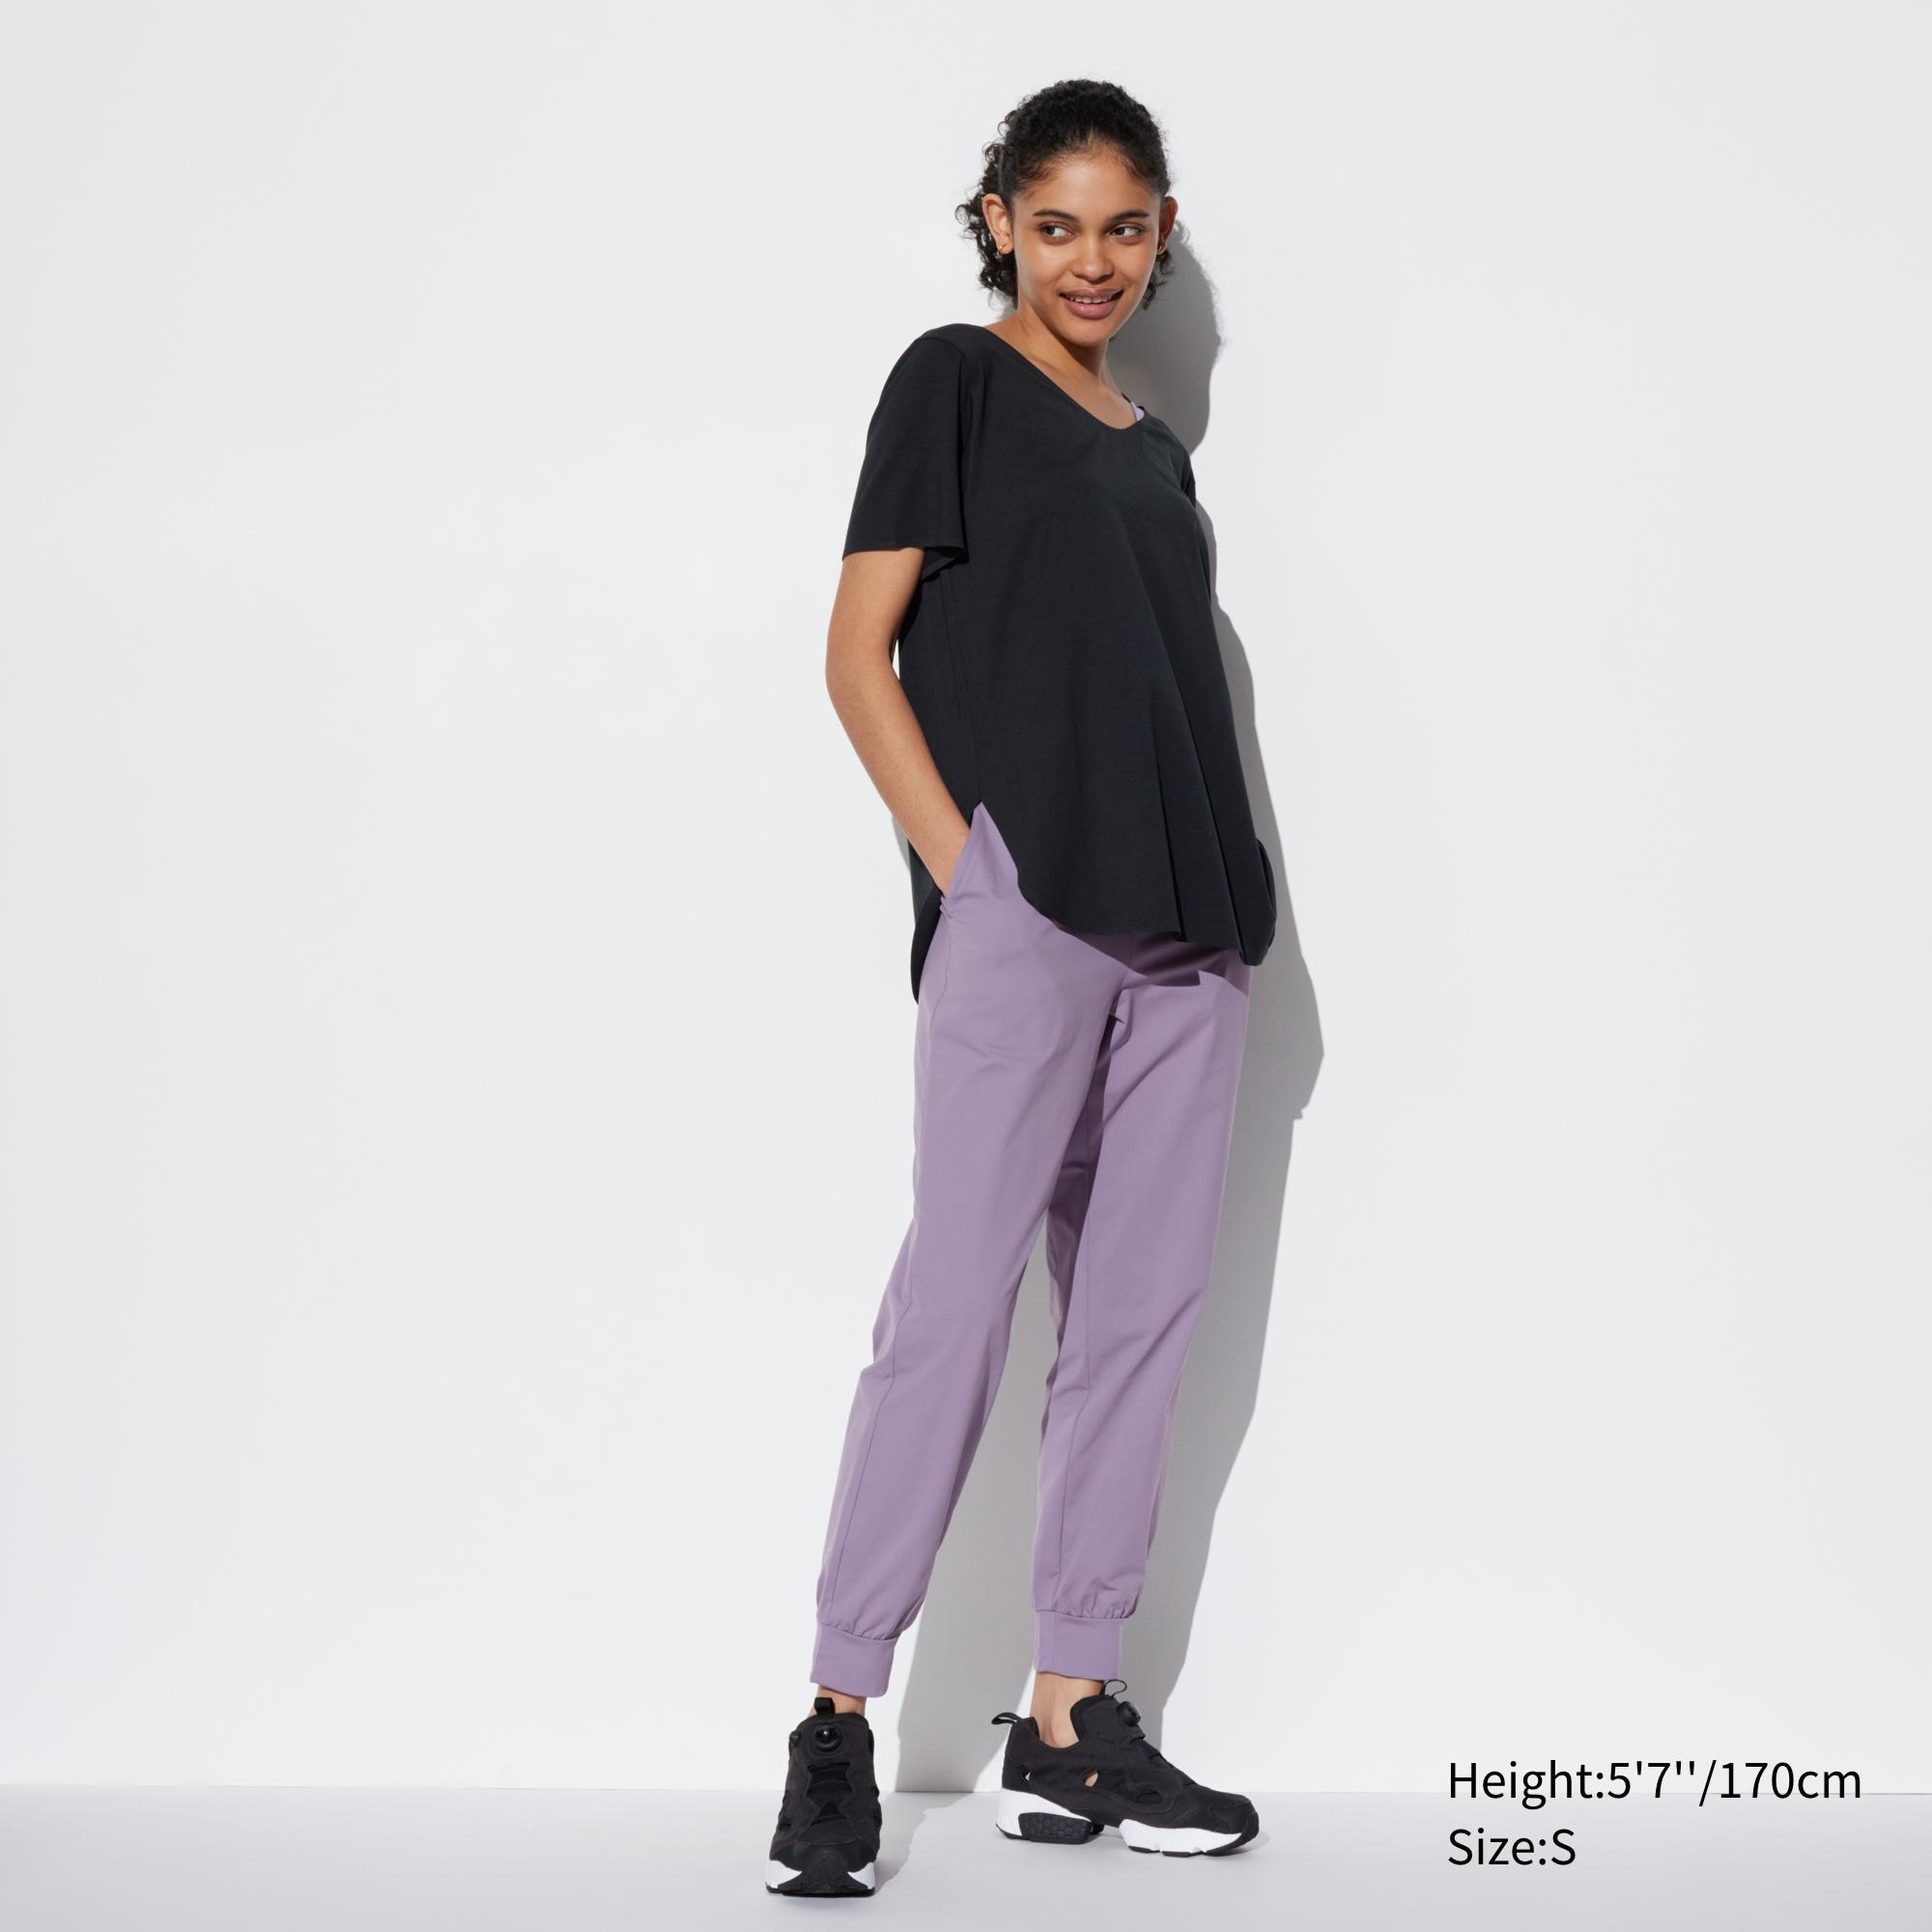 Uniqlo Ultra Stretch Active Jogger Pants, Women's Fashion